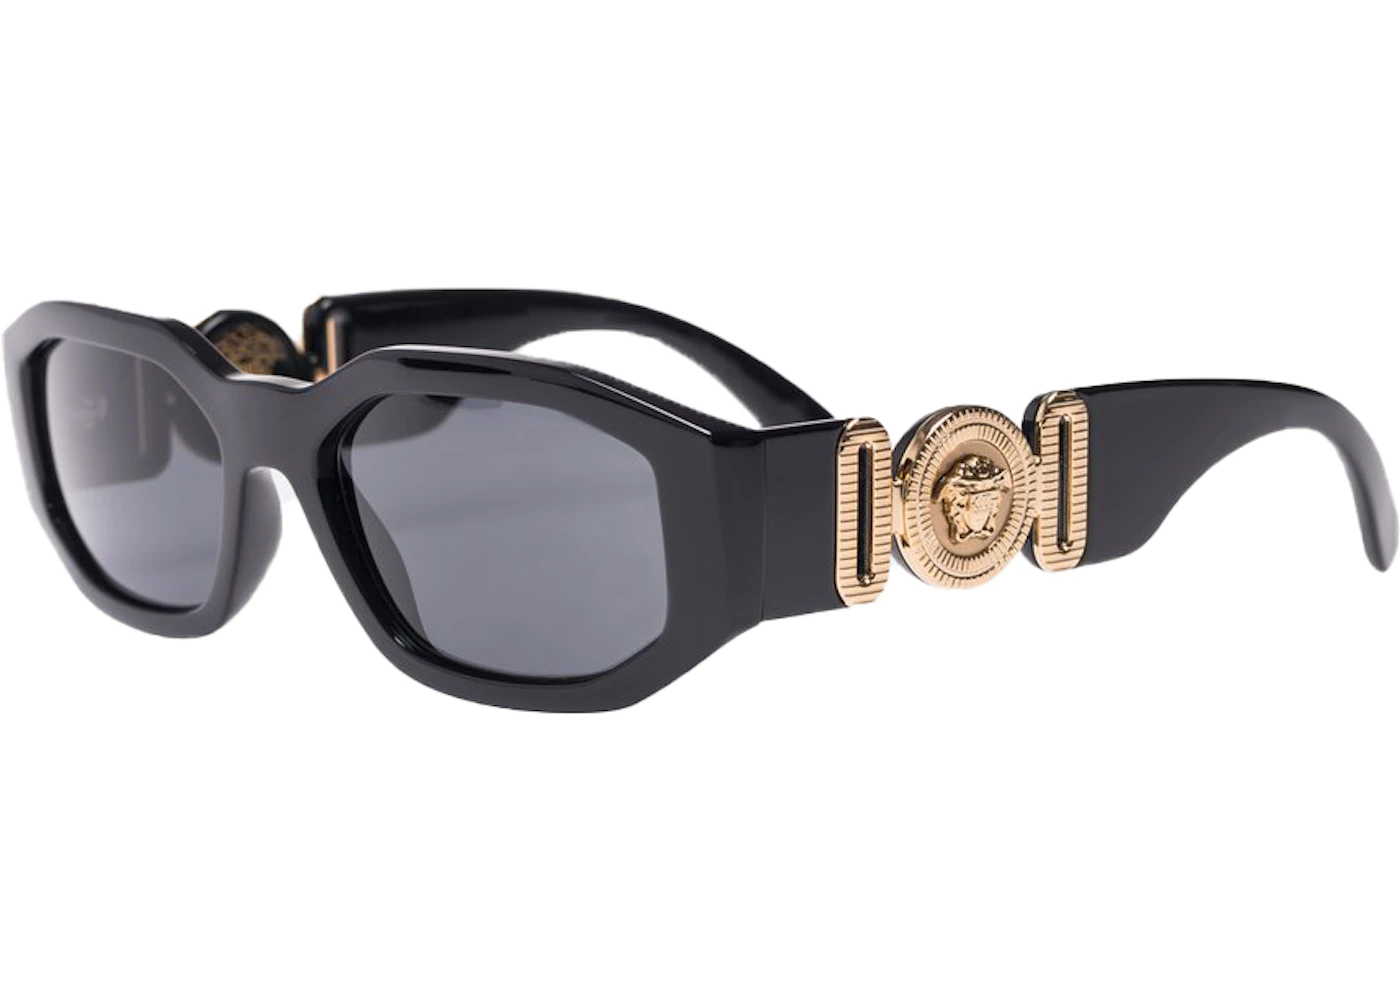 Kith x Versace Sunglasses Black/Gold